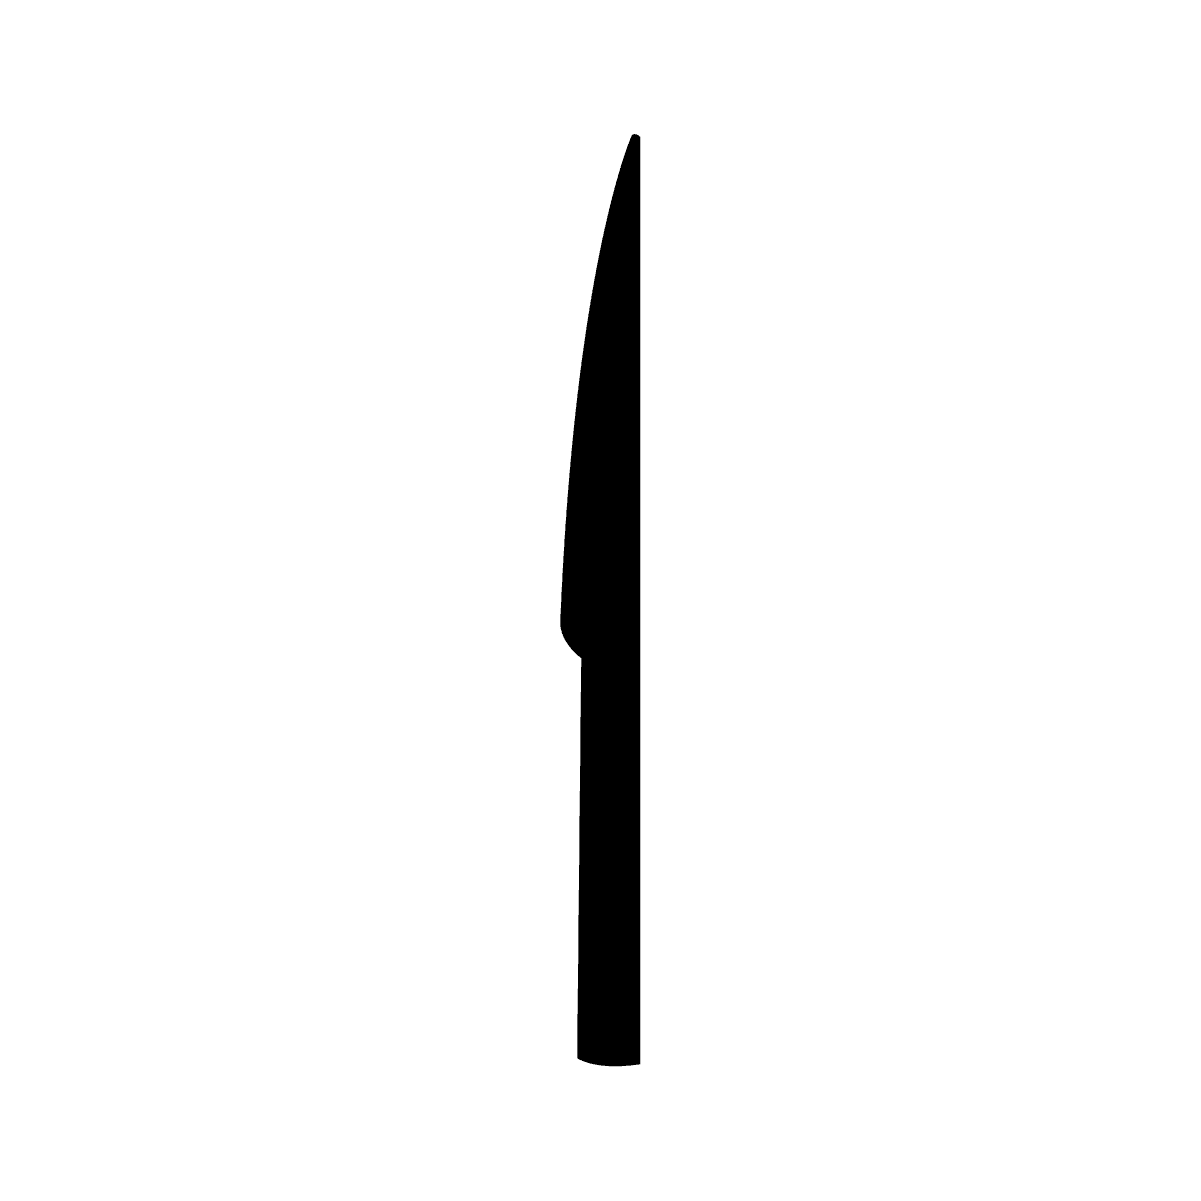 Black kitchen utensil icons